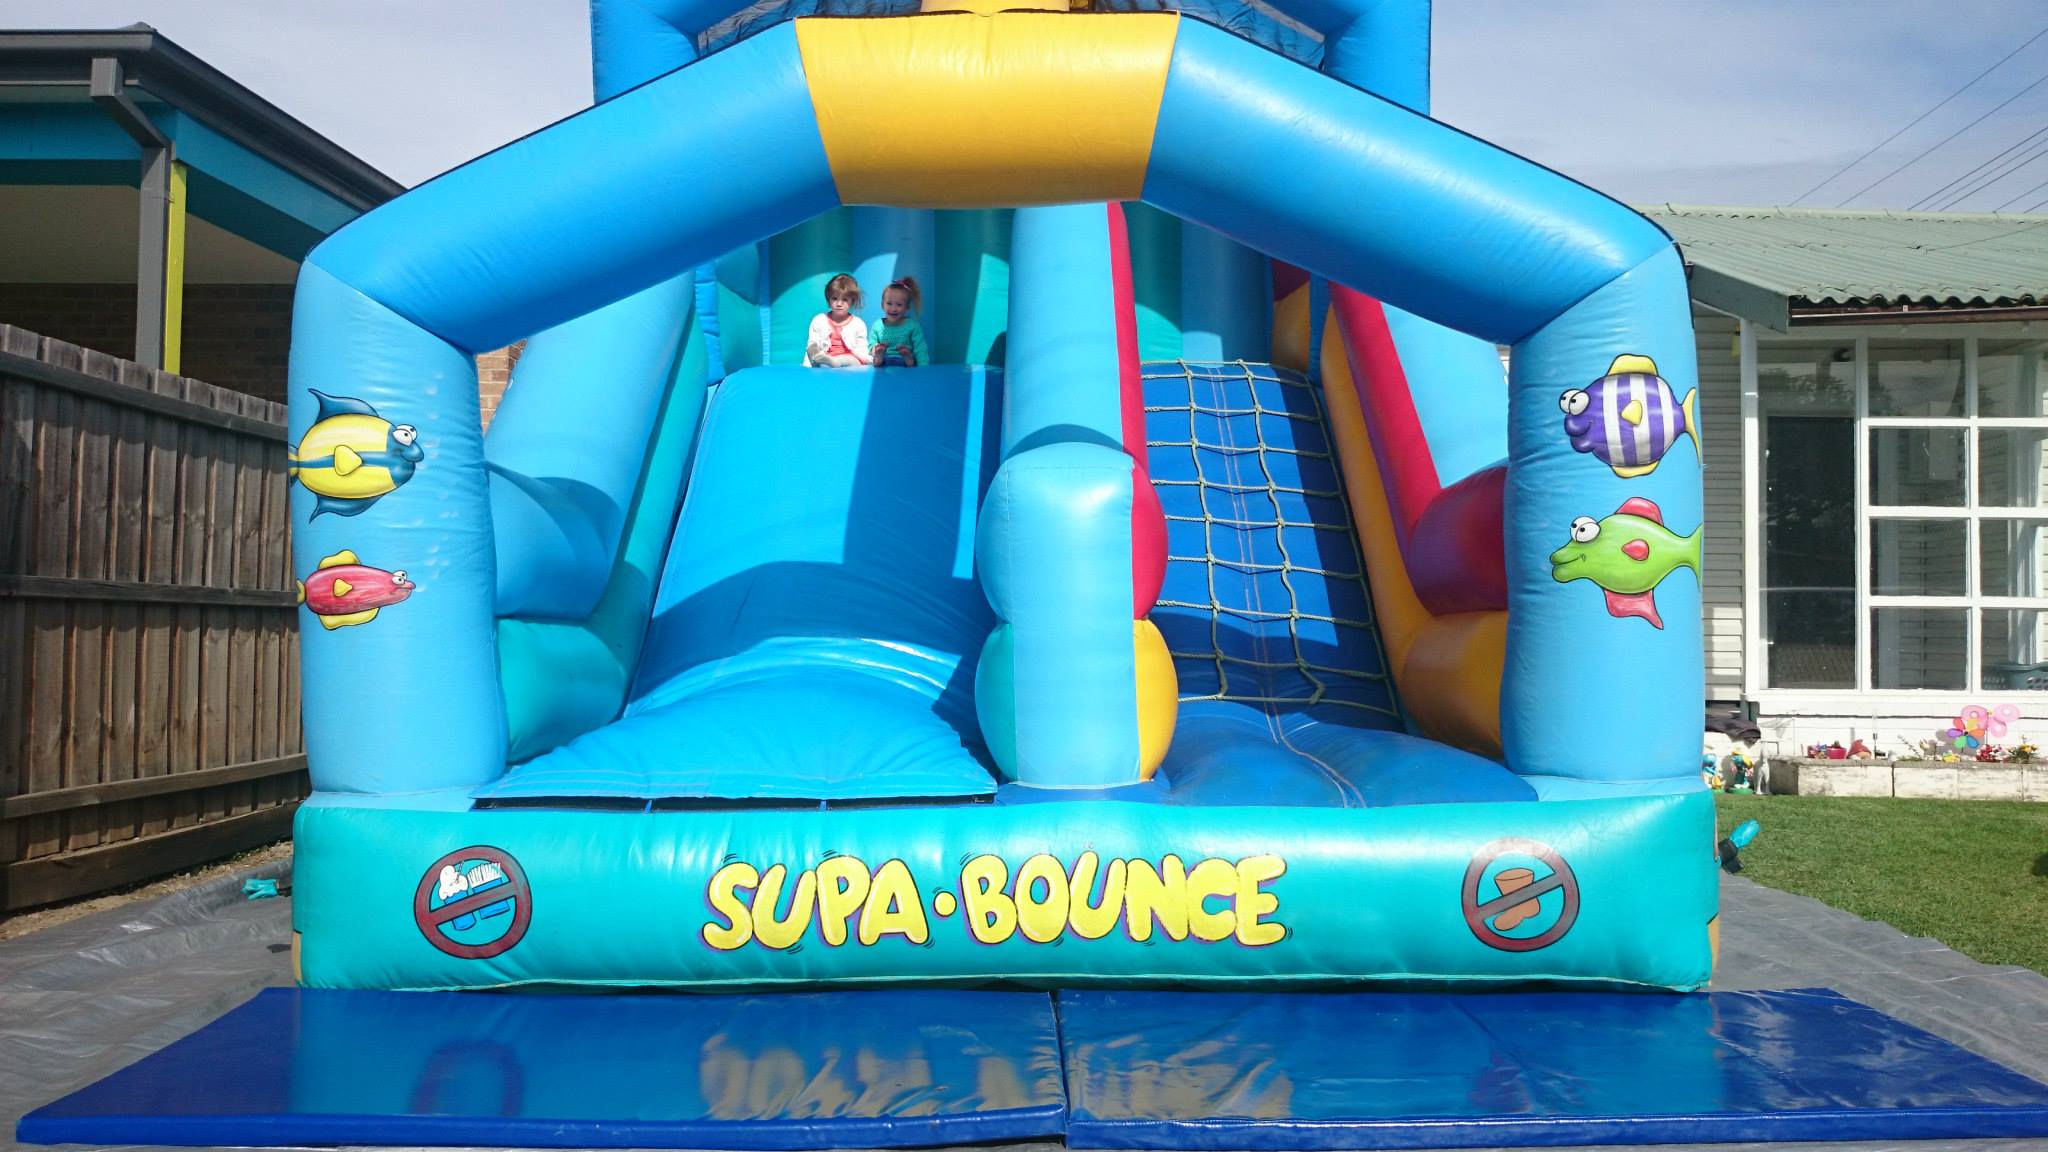 Geelong bouncy castle hire